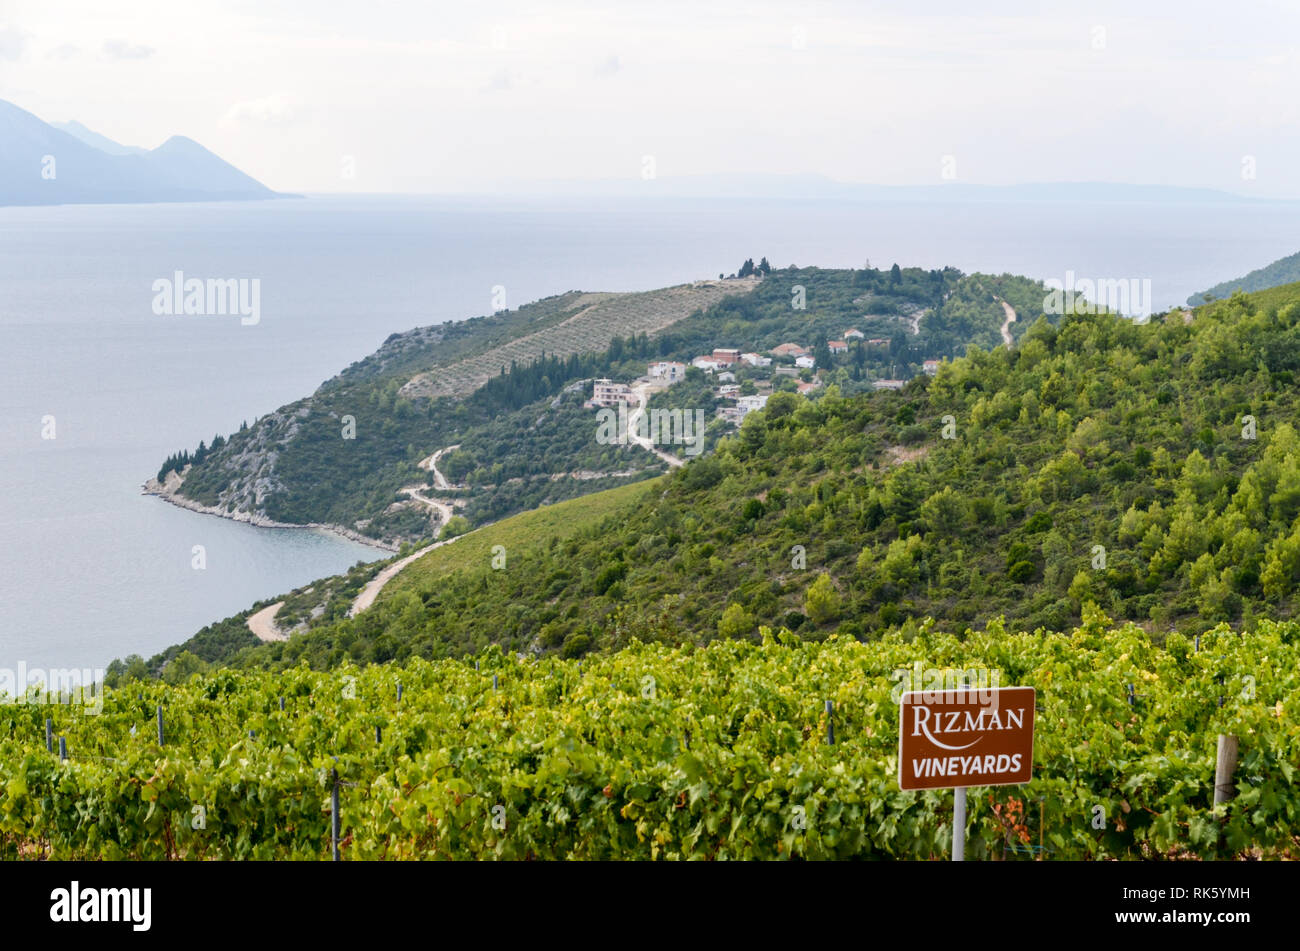 Croatian vineyards, Rizman. Along the Adriatic coastline. Stock Photo